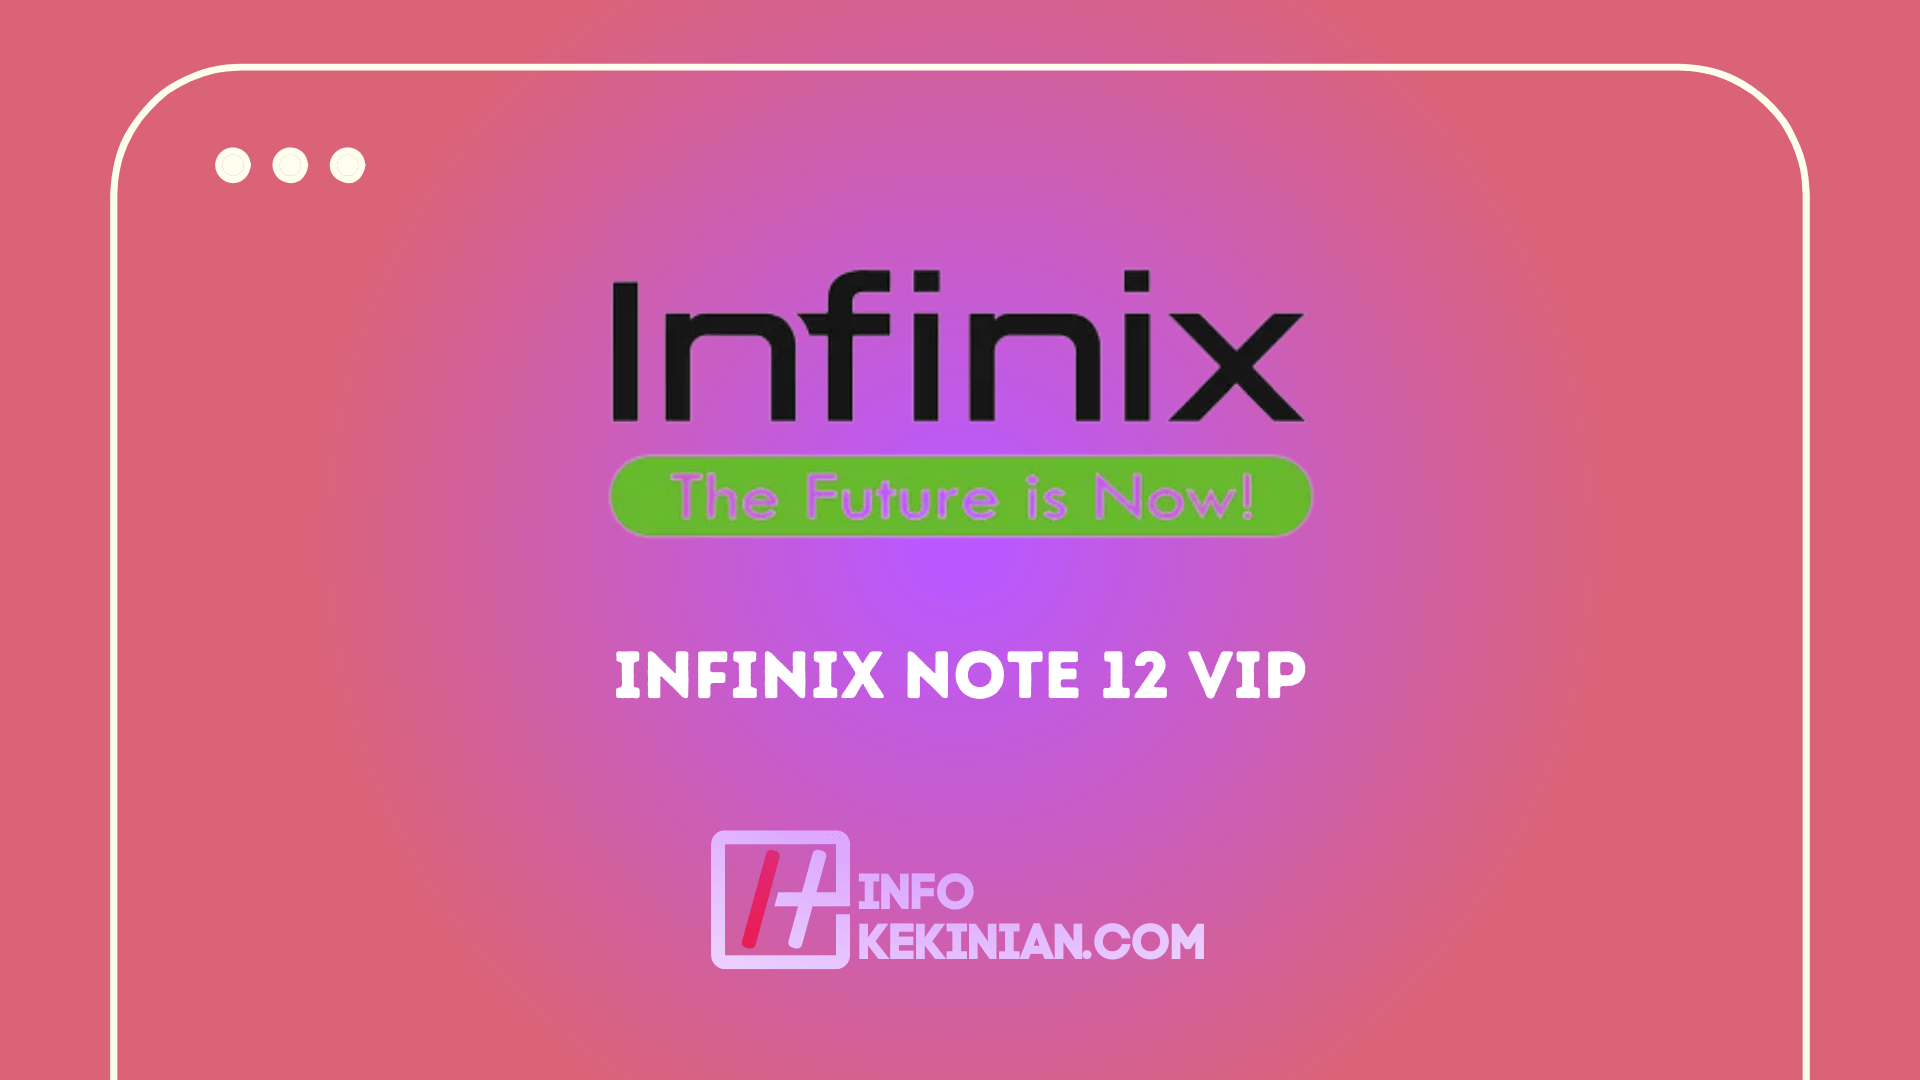 Инфиникс вип купить. Инфиникс ноут 12. Infinix Note 12 VIP Review. Infinix Note 12 VIP характеристики. Infinix Note 12 VIP обзор.